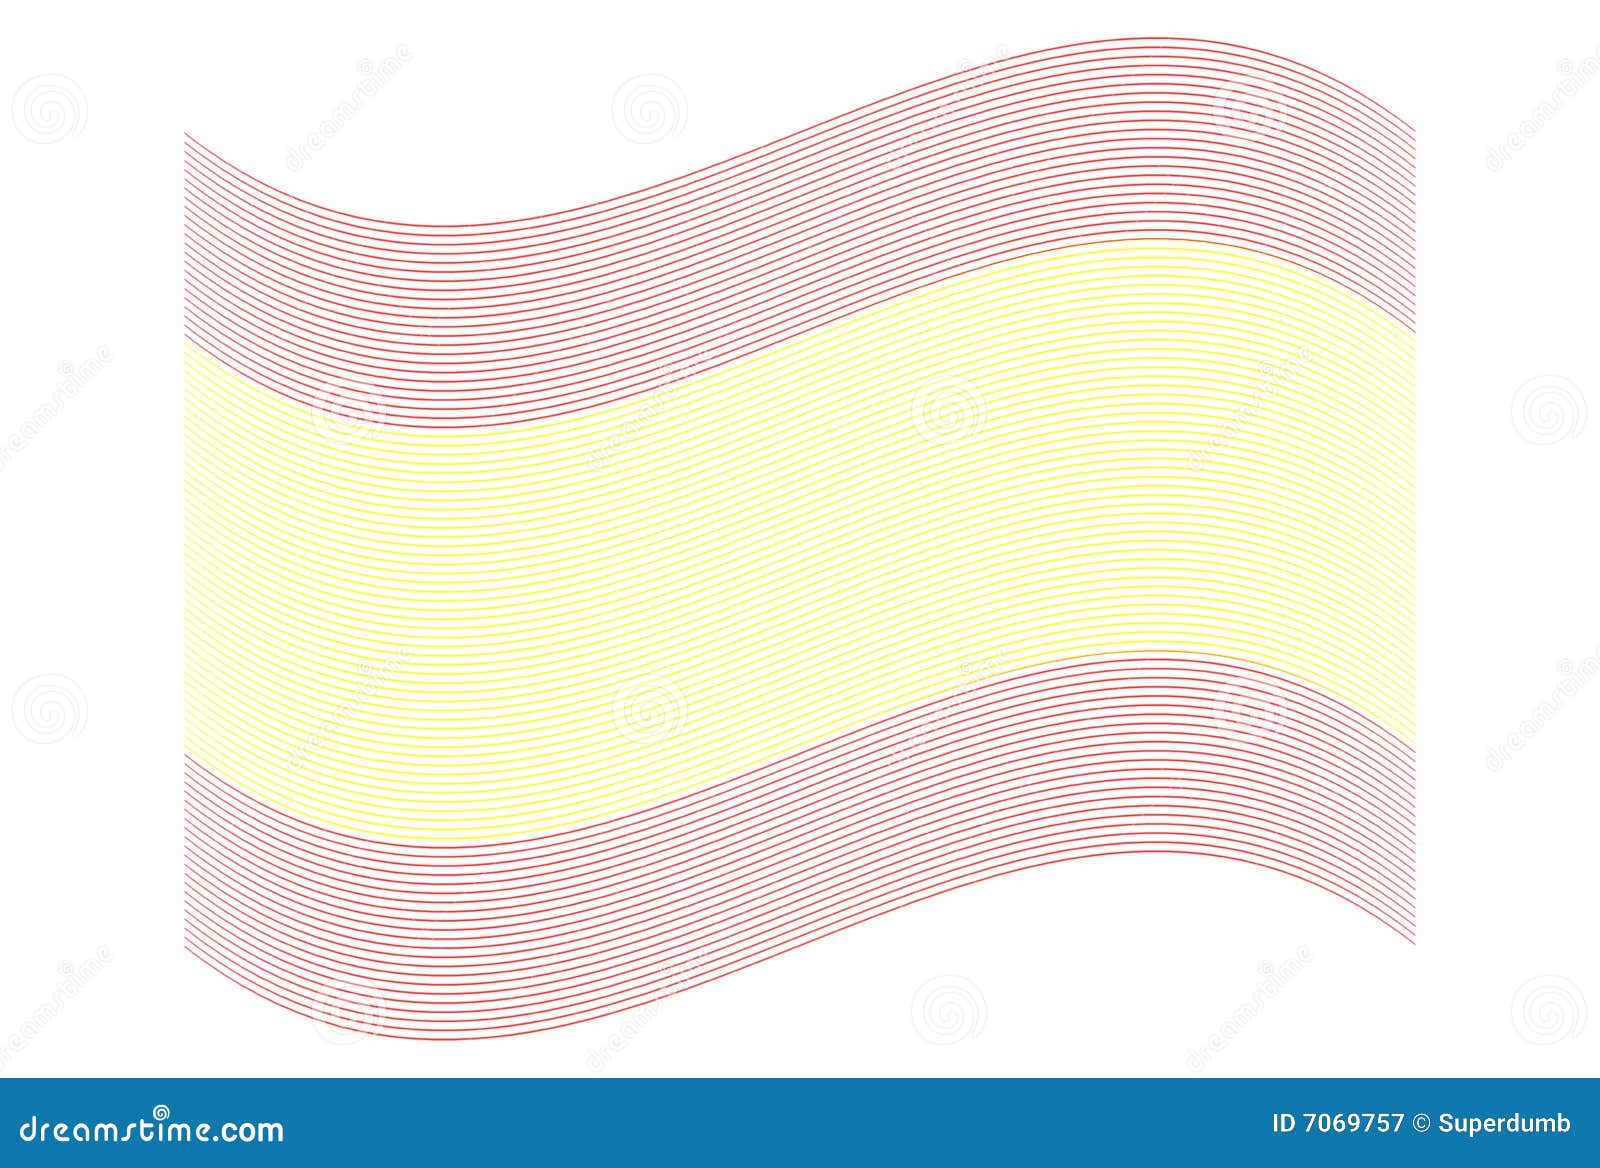 Spanish Flag stock illustration. Illustration of abstract ...